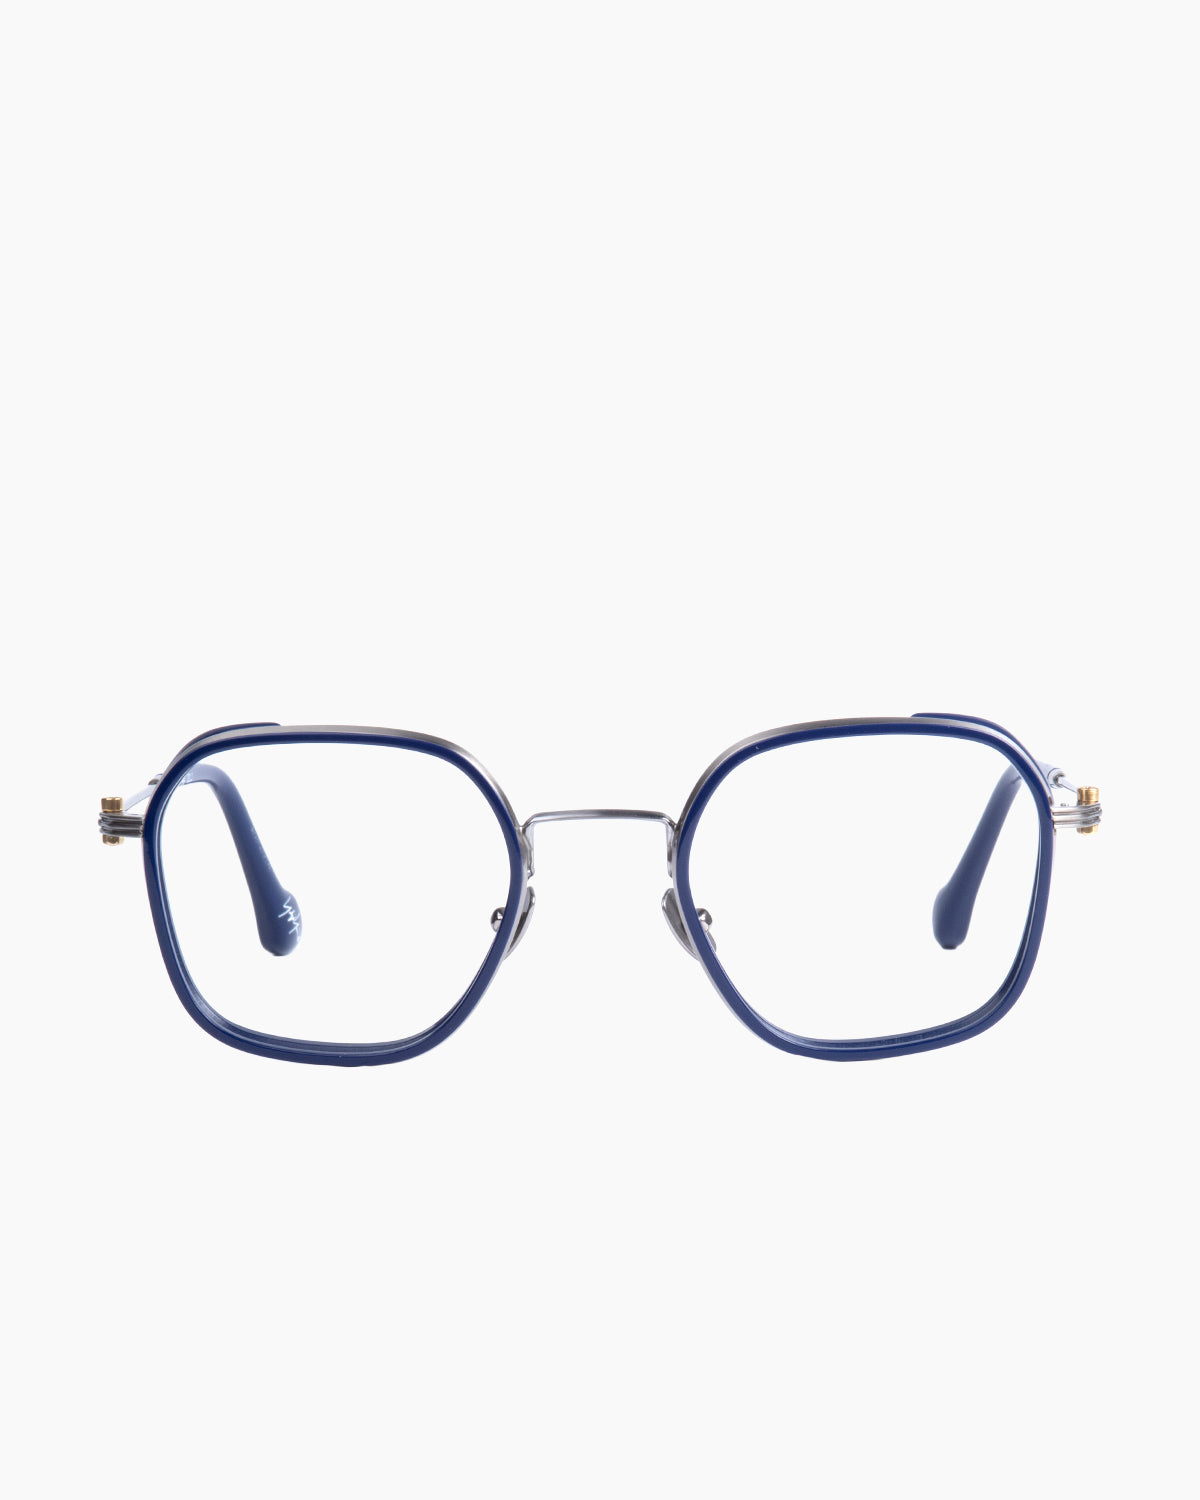 Yohji Yamamoto - Look004 - 004 | glasses bar:  Marie-Sophie Dion